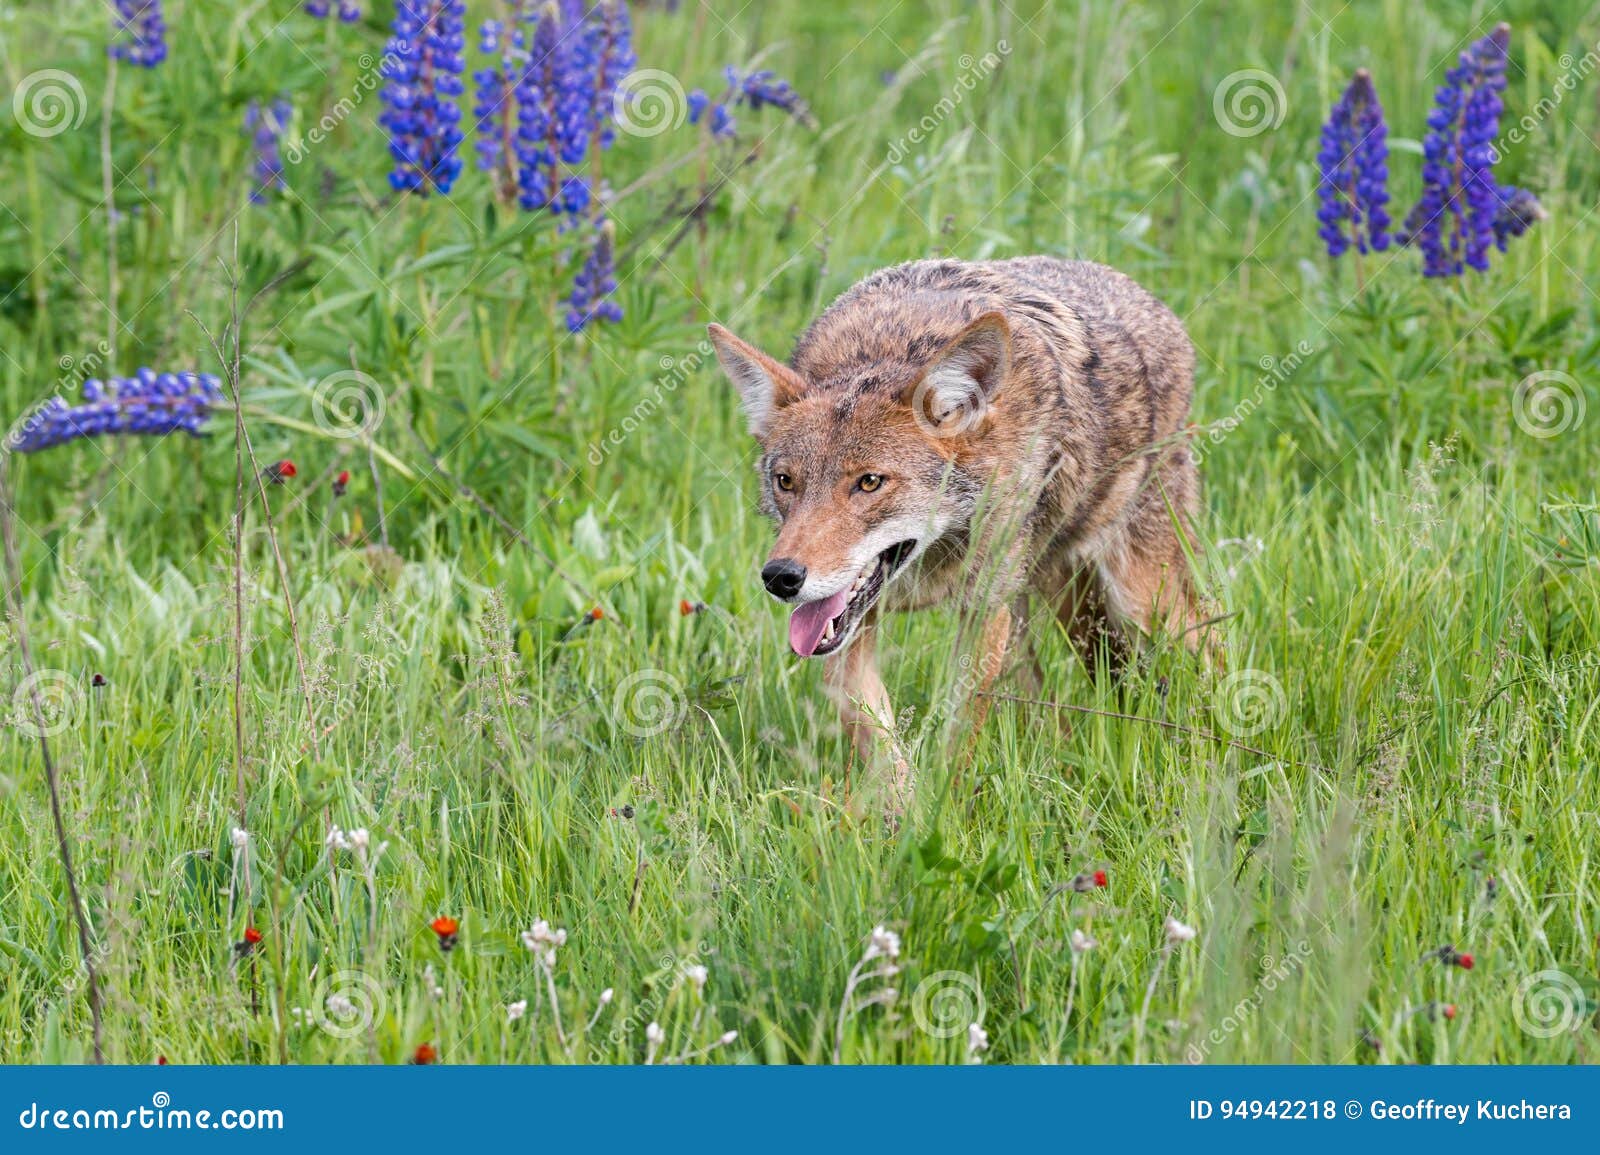 coyote canis latrans prowls through grass